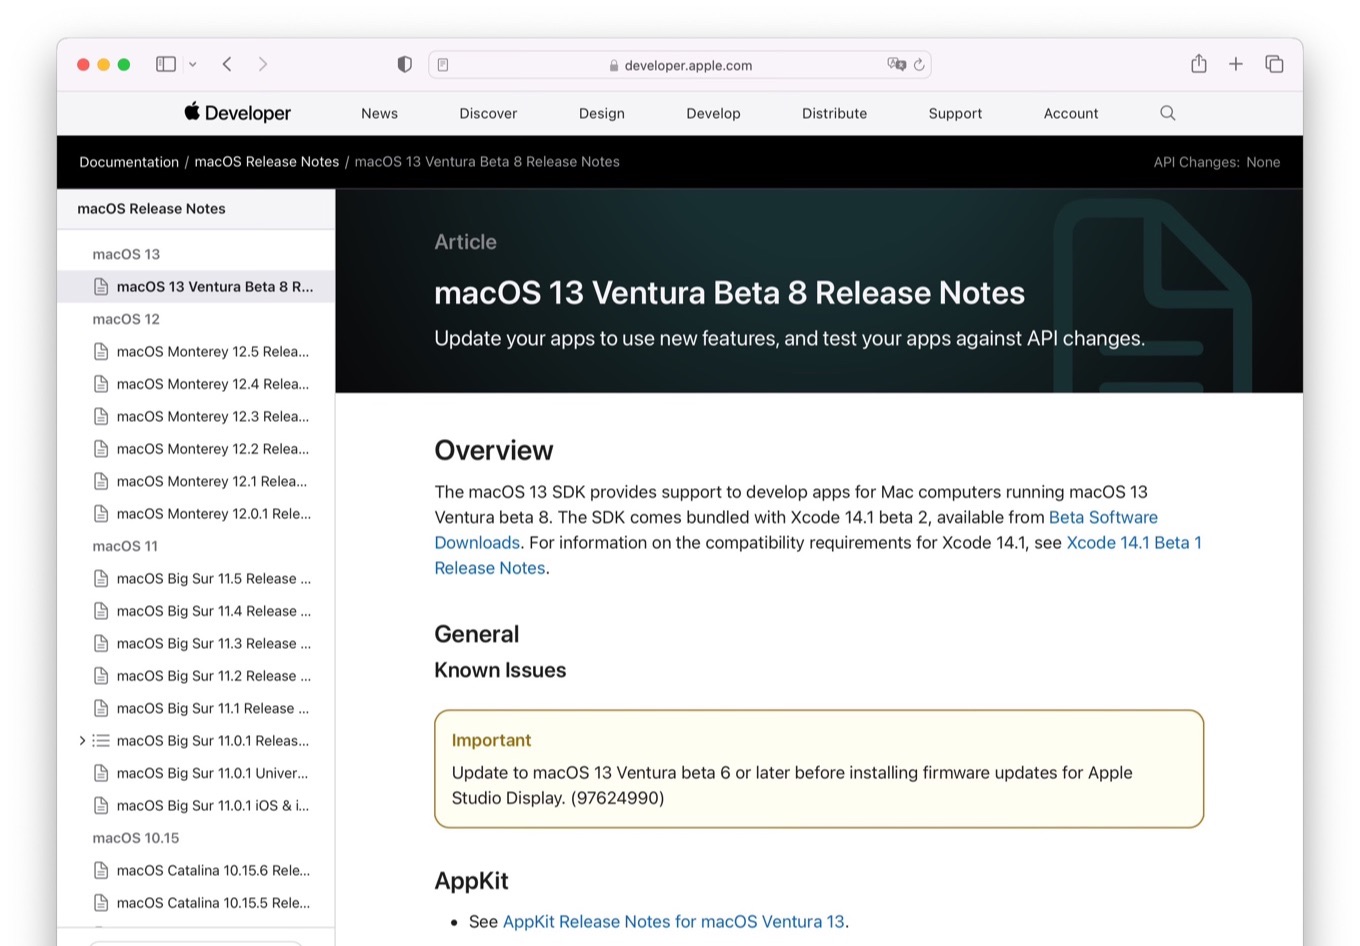 macOS 13 Ventura Beta 8 Release Notes